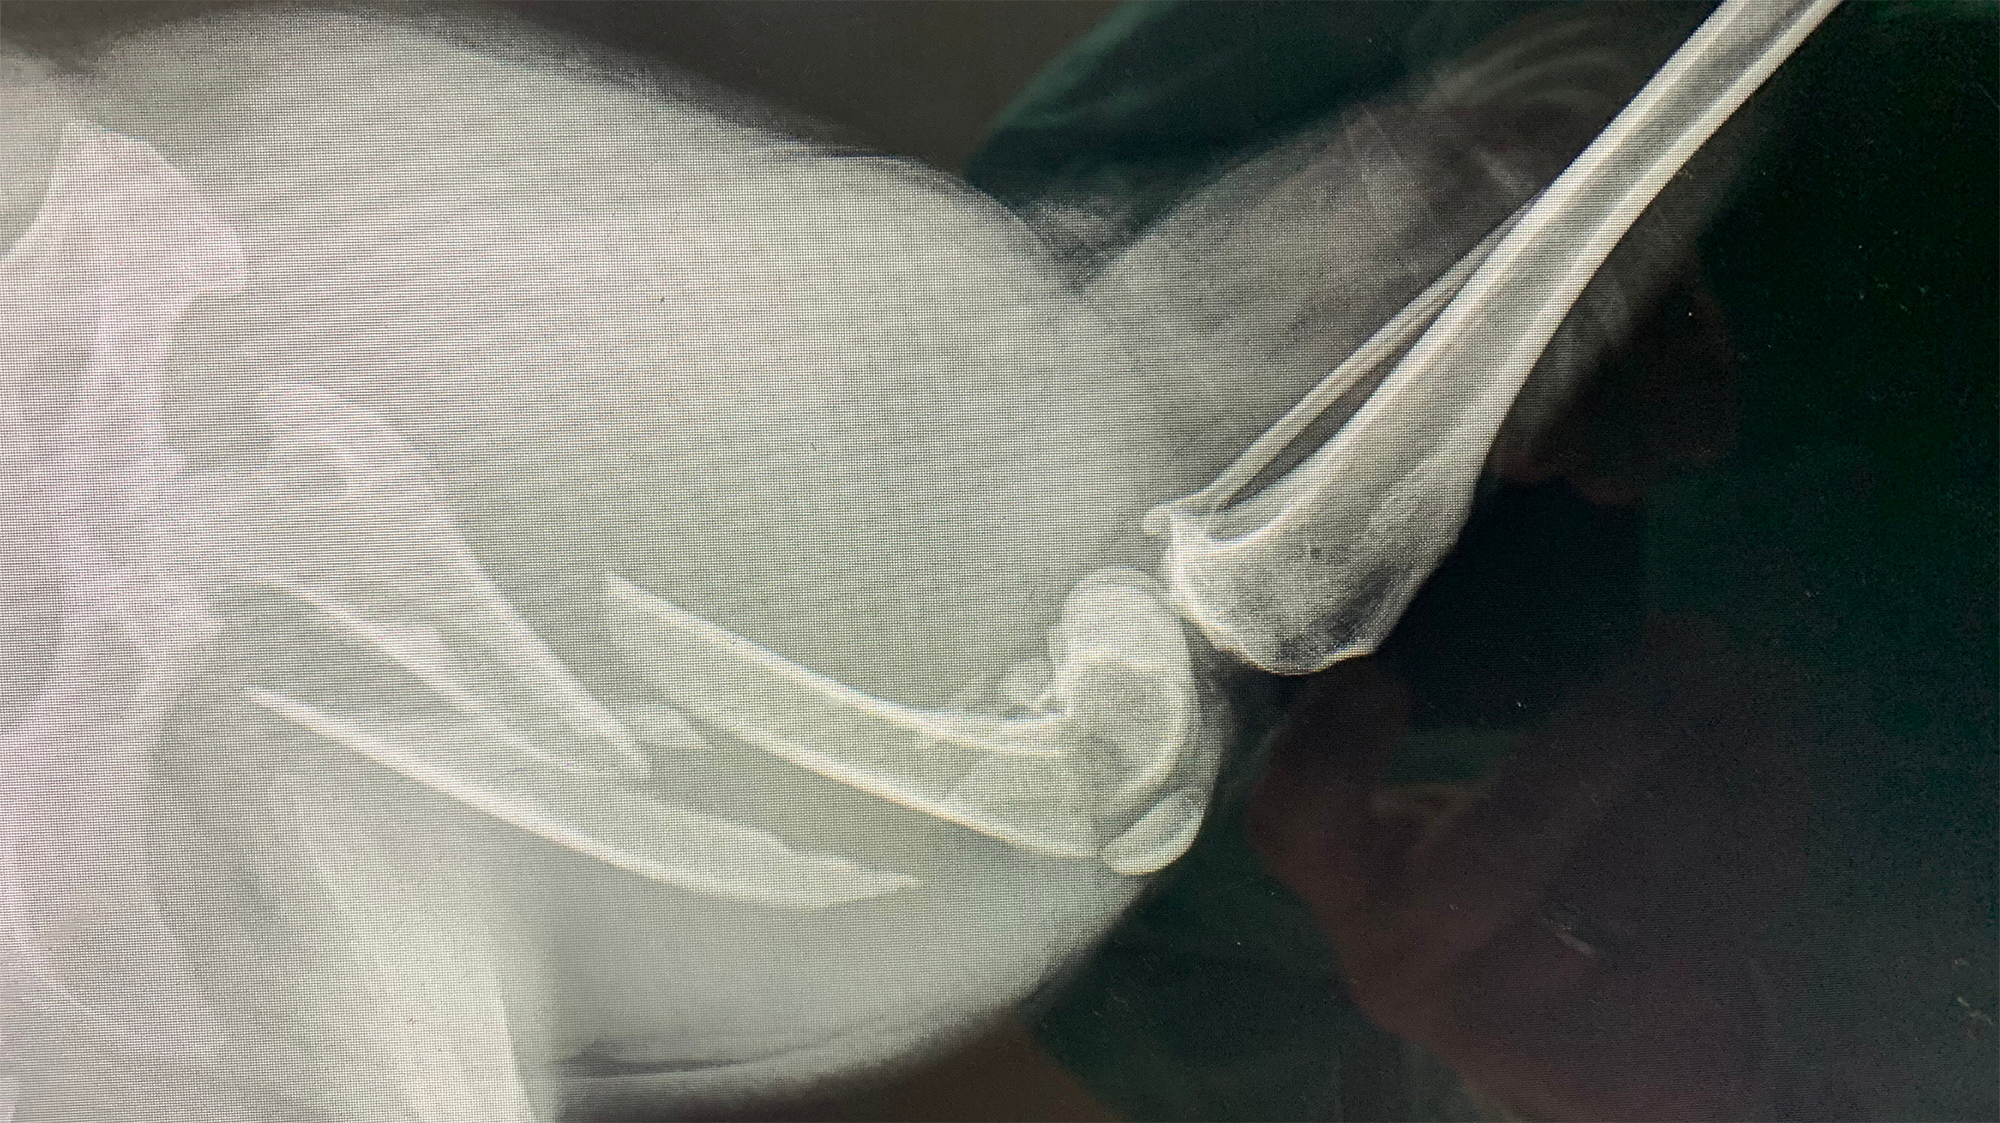 Chevy the dog's broken leg x-ray